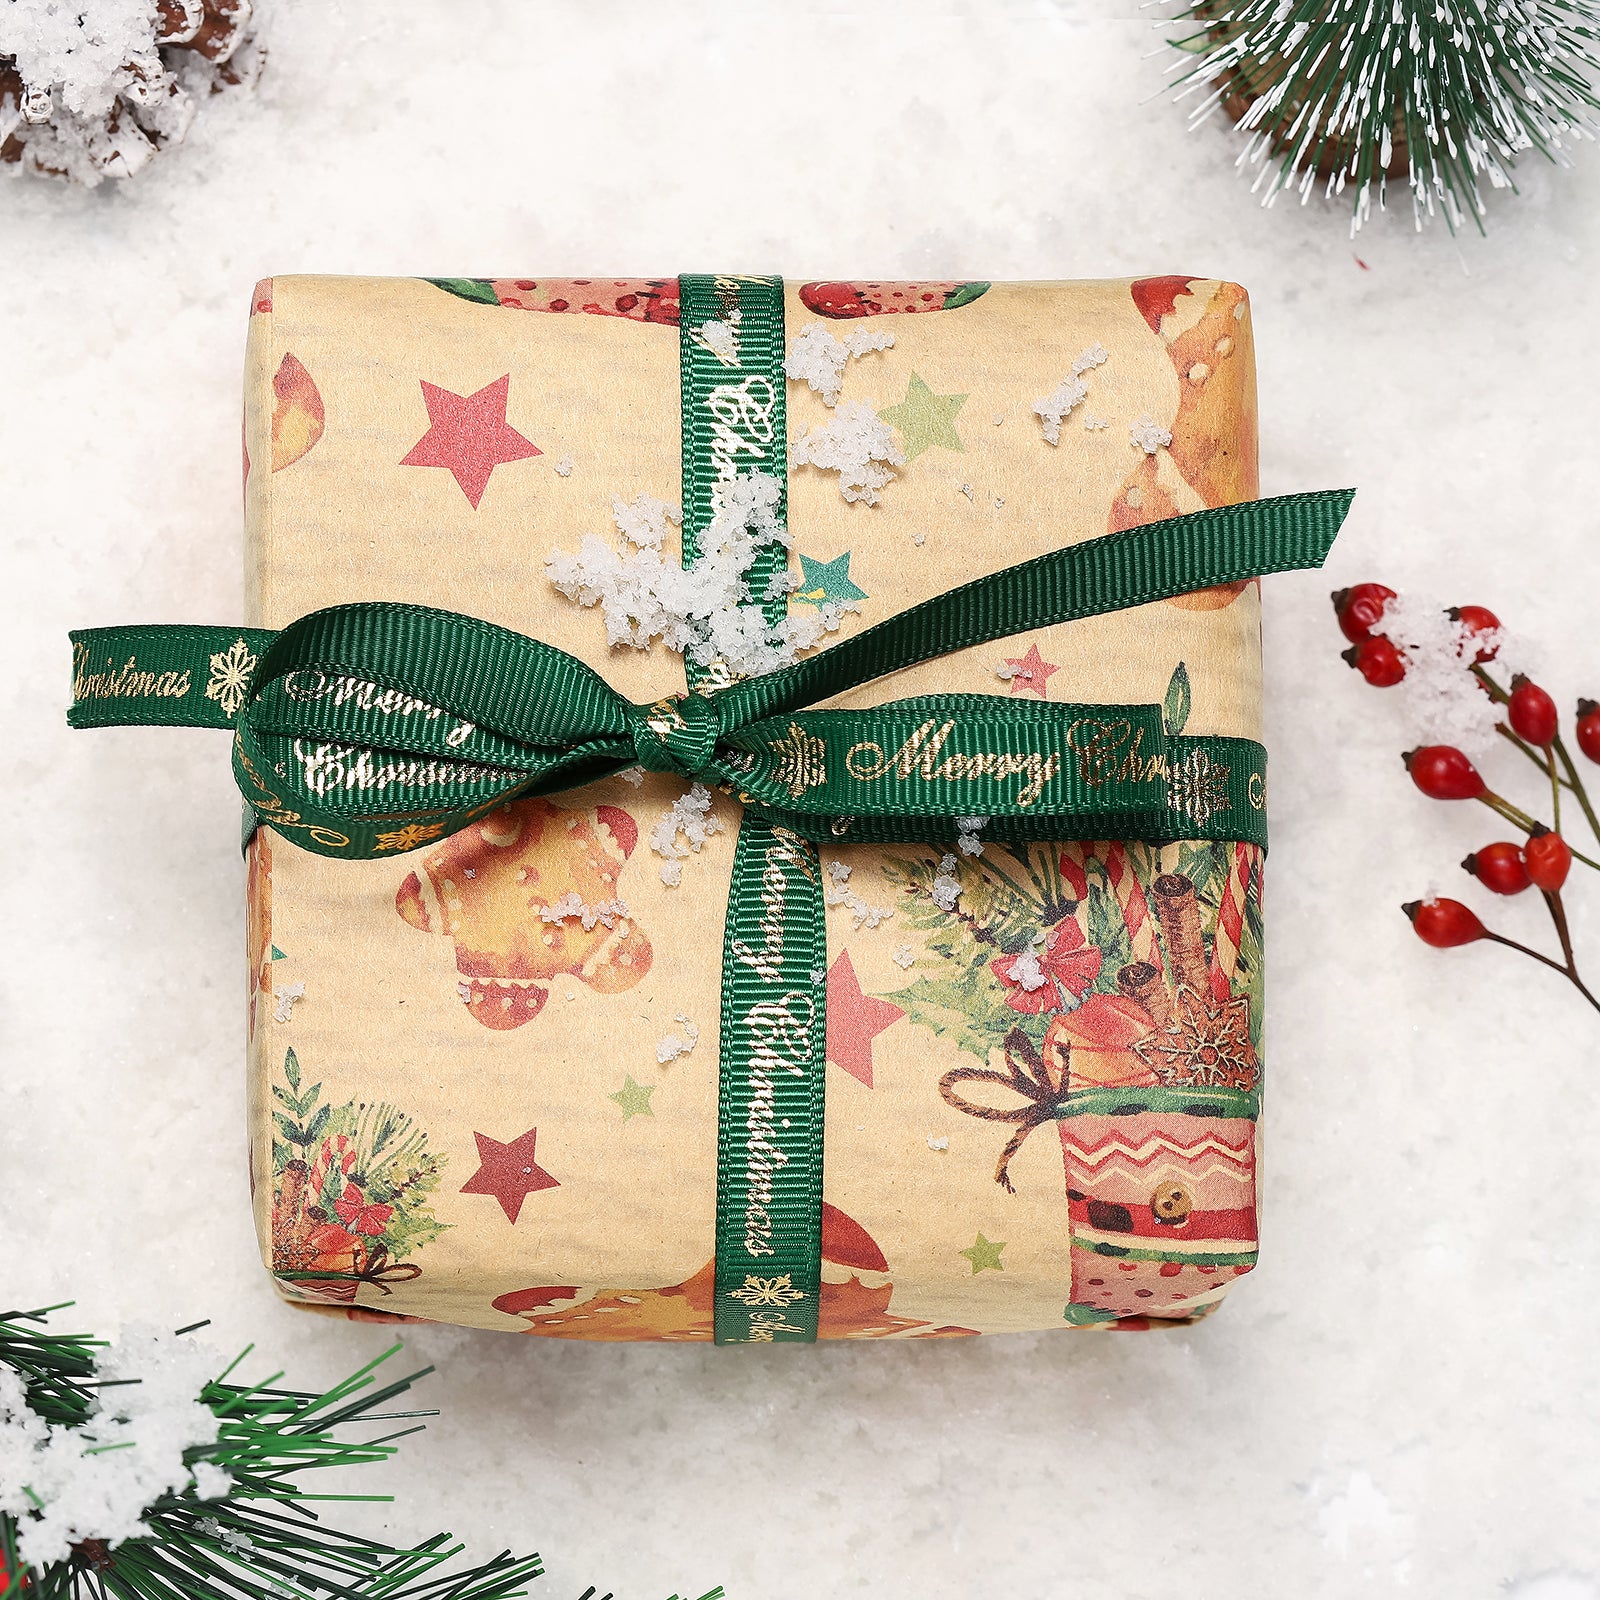 Selenichast Christmas Gift Wrapping